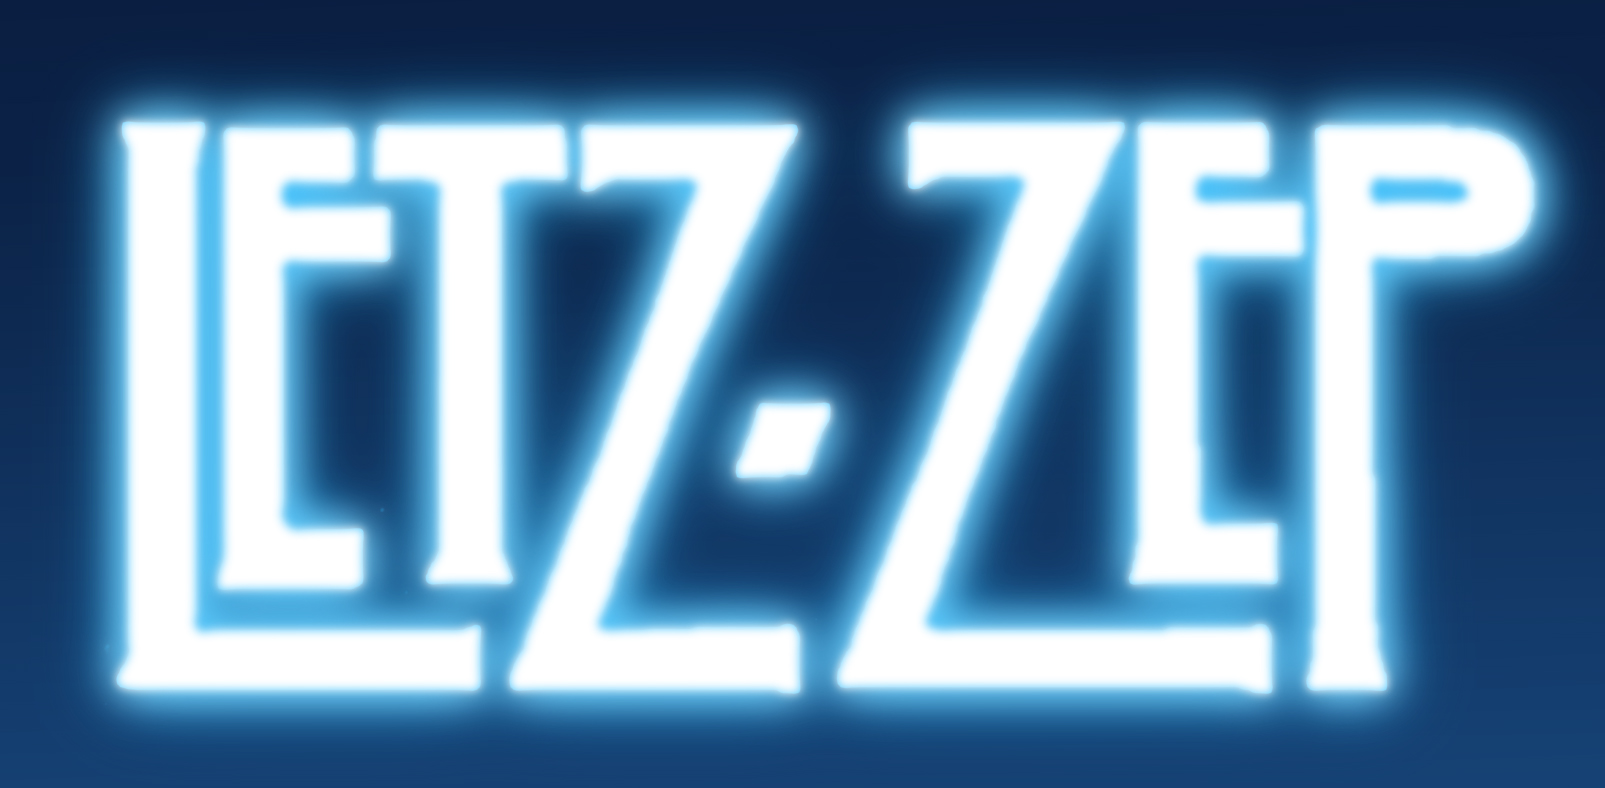 Letz Zep logo